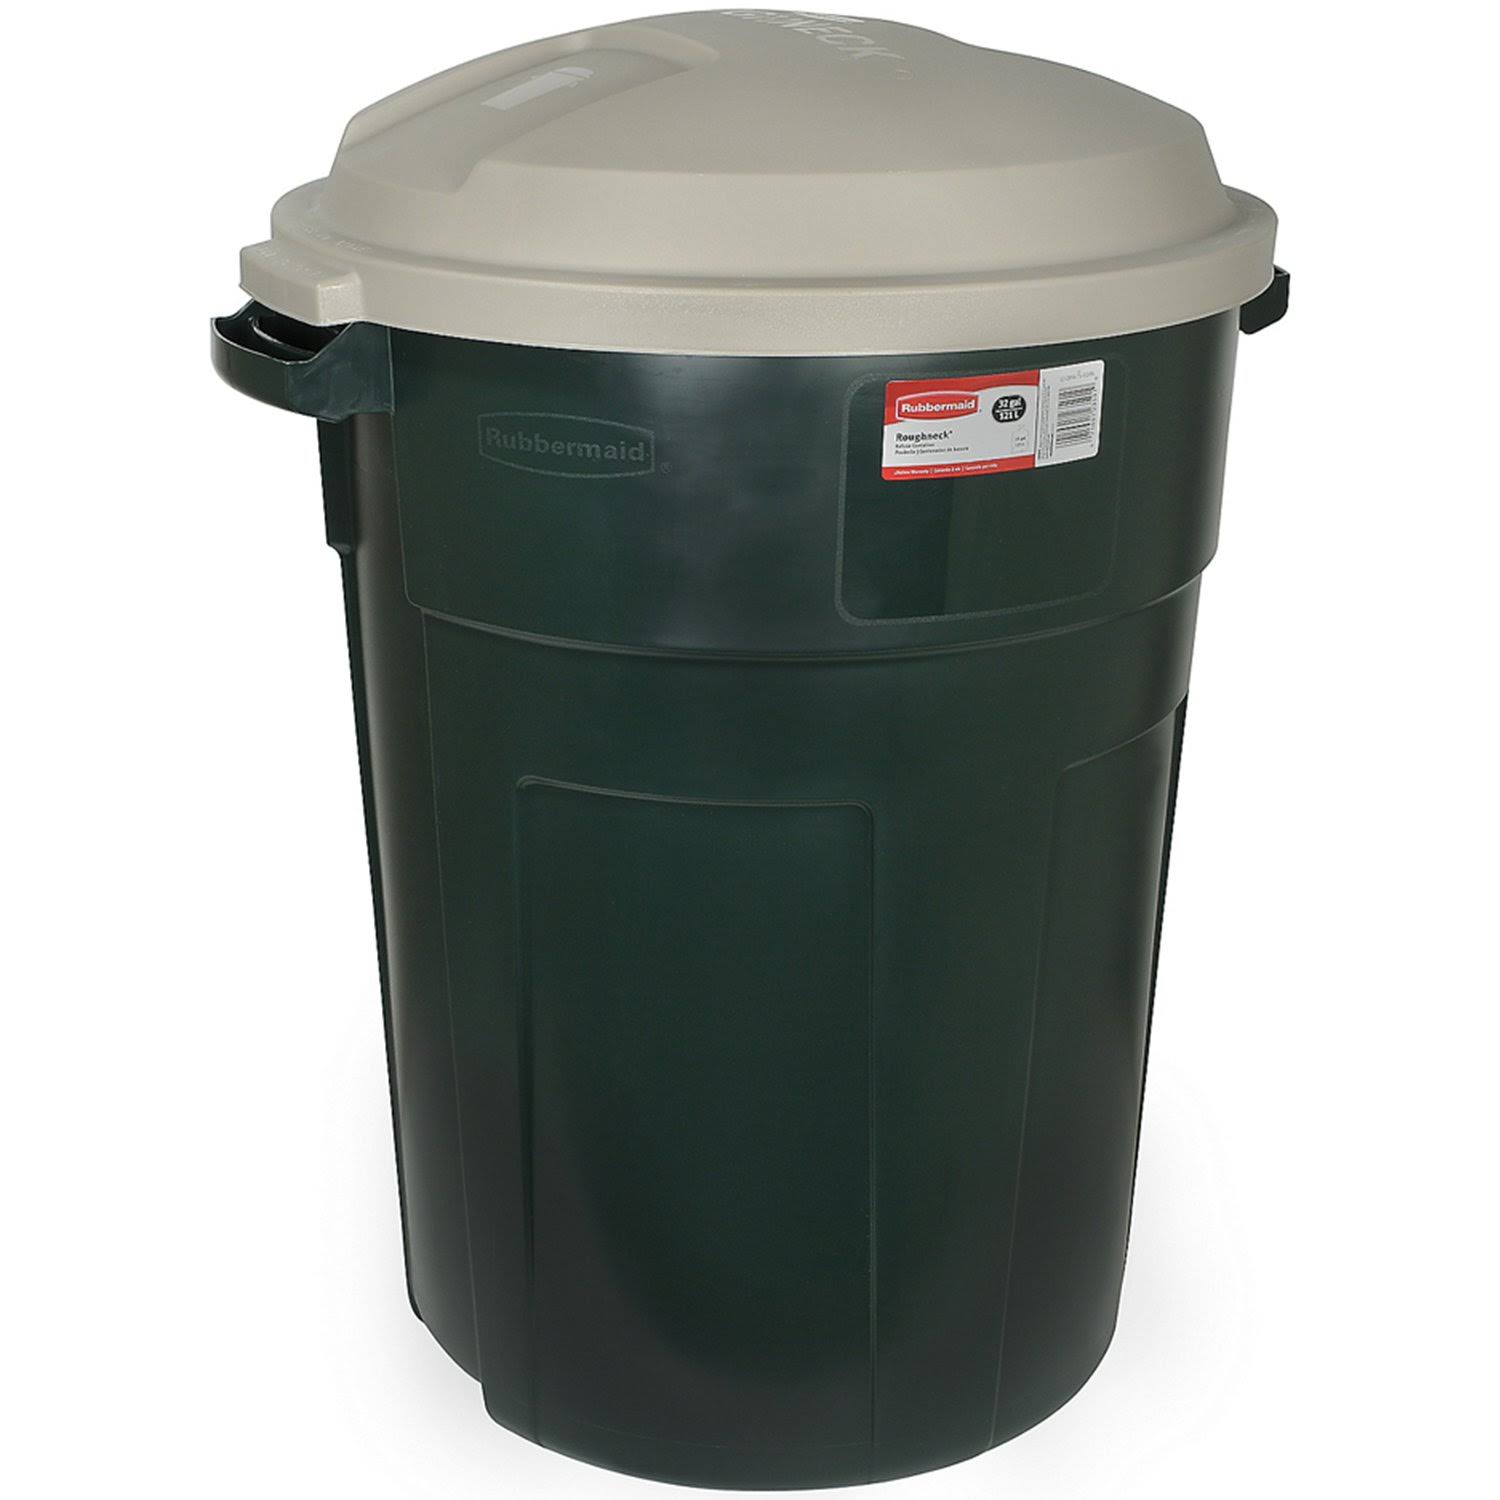 Rubbermaid Roughneck Trash Can - 32 Gallon